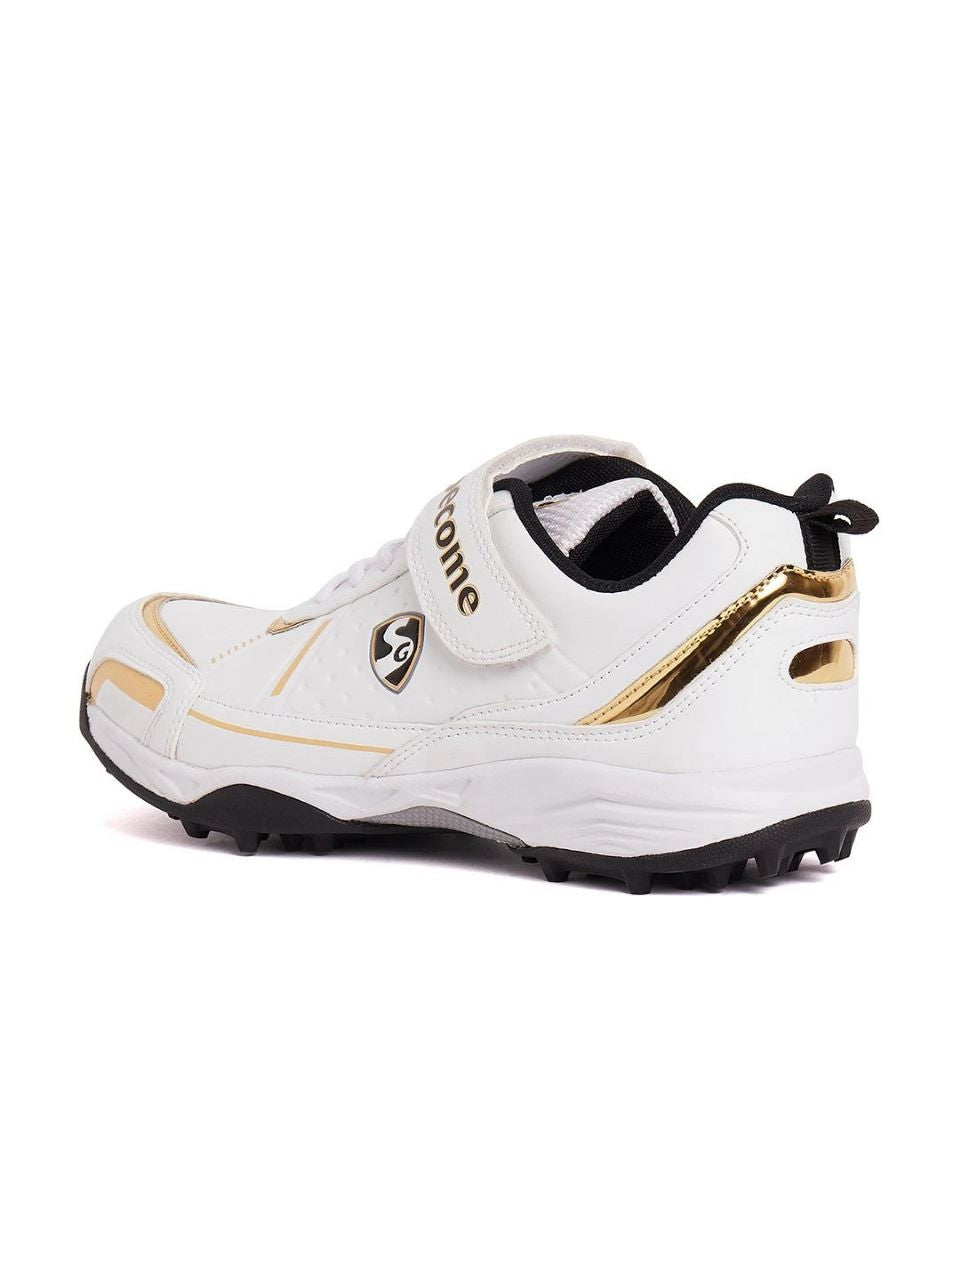 SG Century 5.0 Cricket Shoe - White/Gold/Black